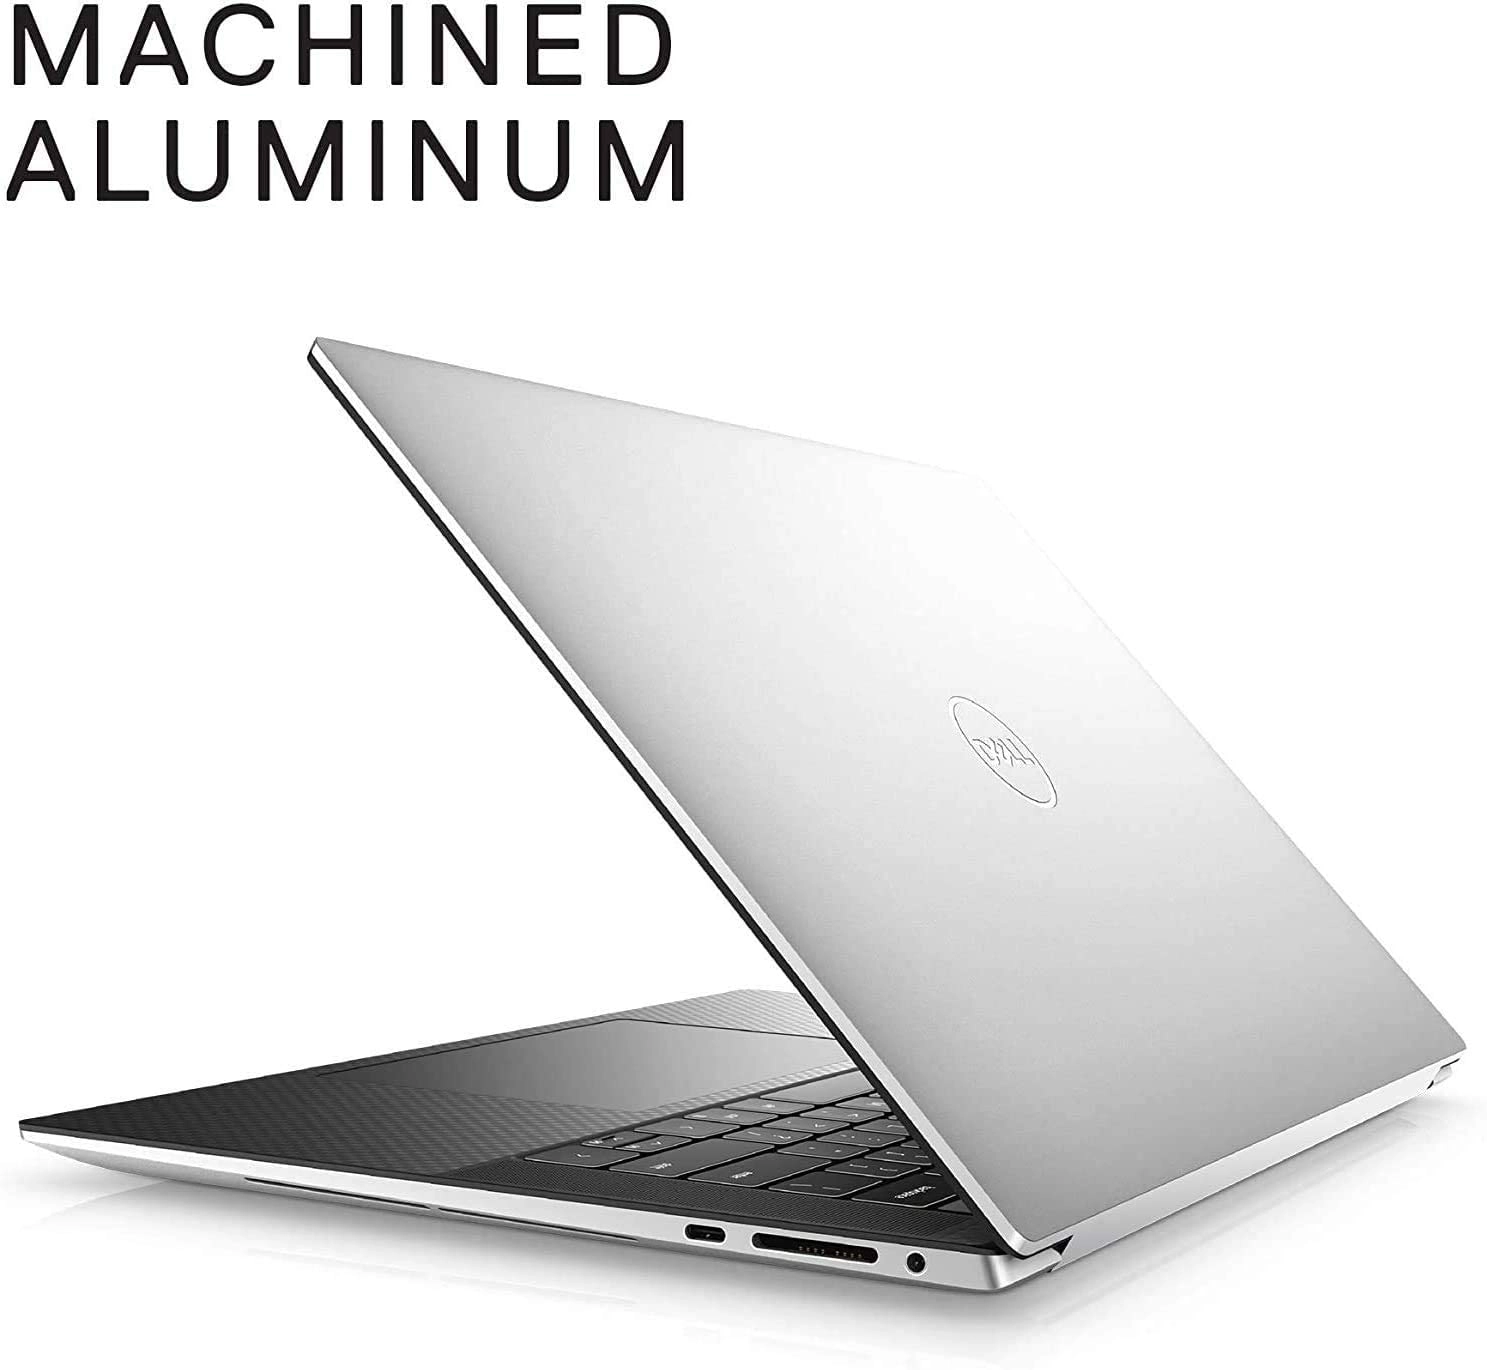 Dell XPS9500 laptop image